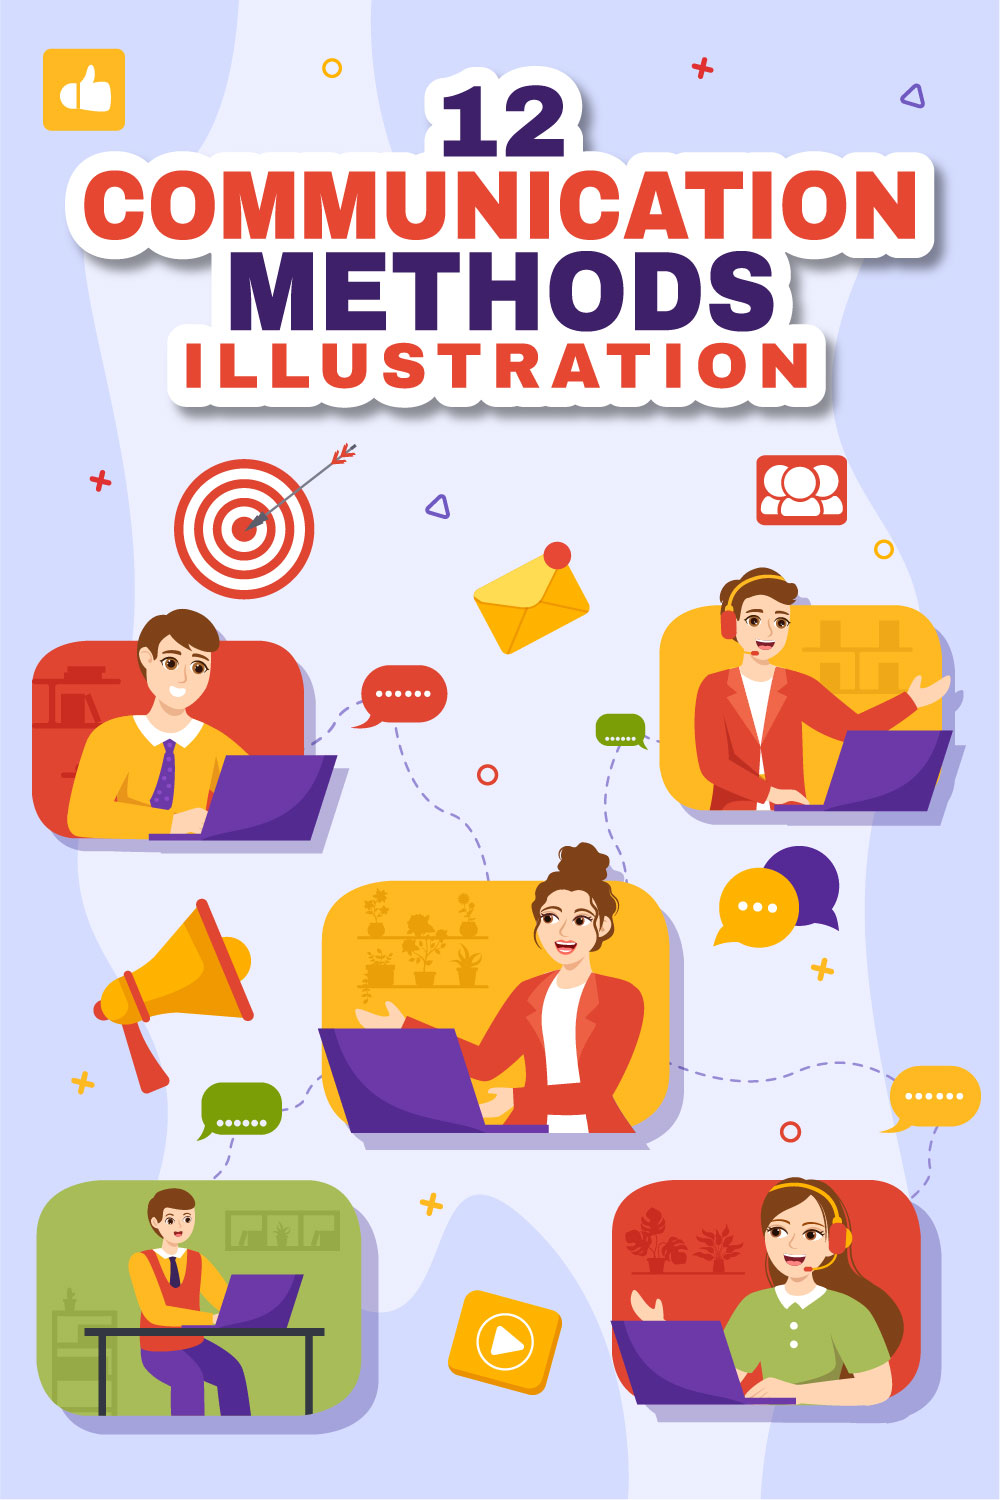 12 Communication Methods Illustration pinterest preview image.